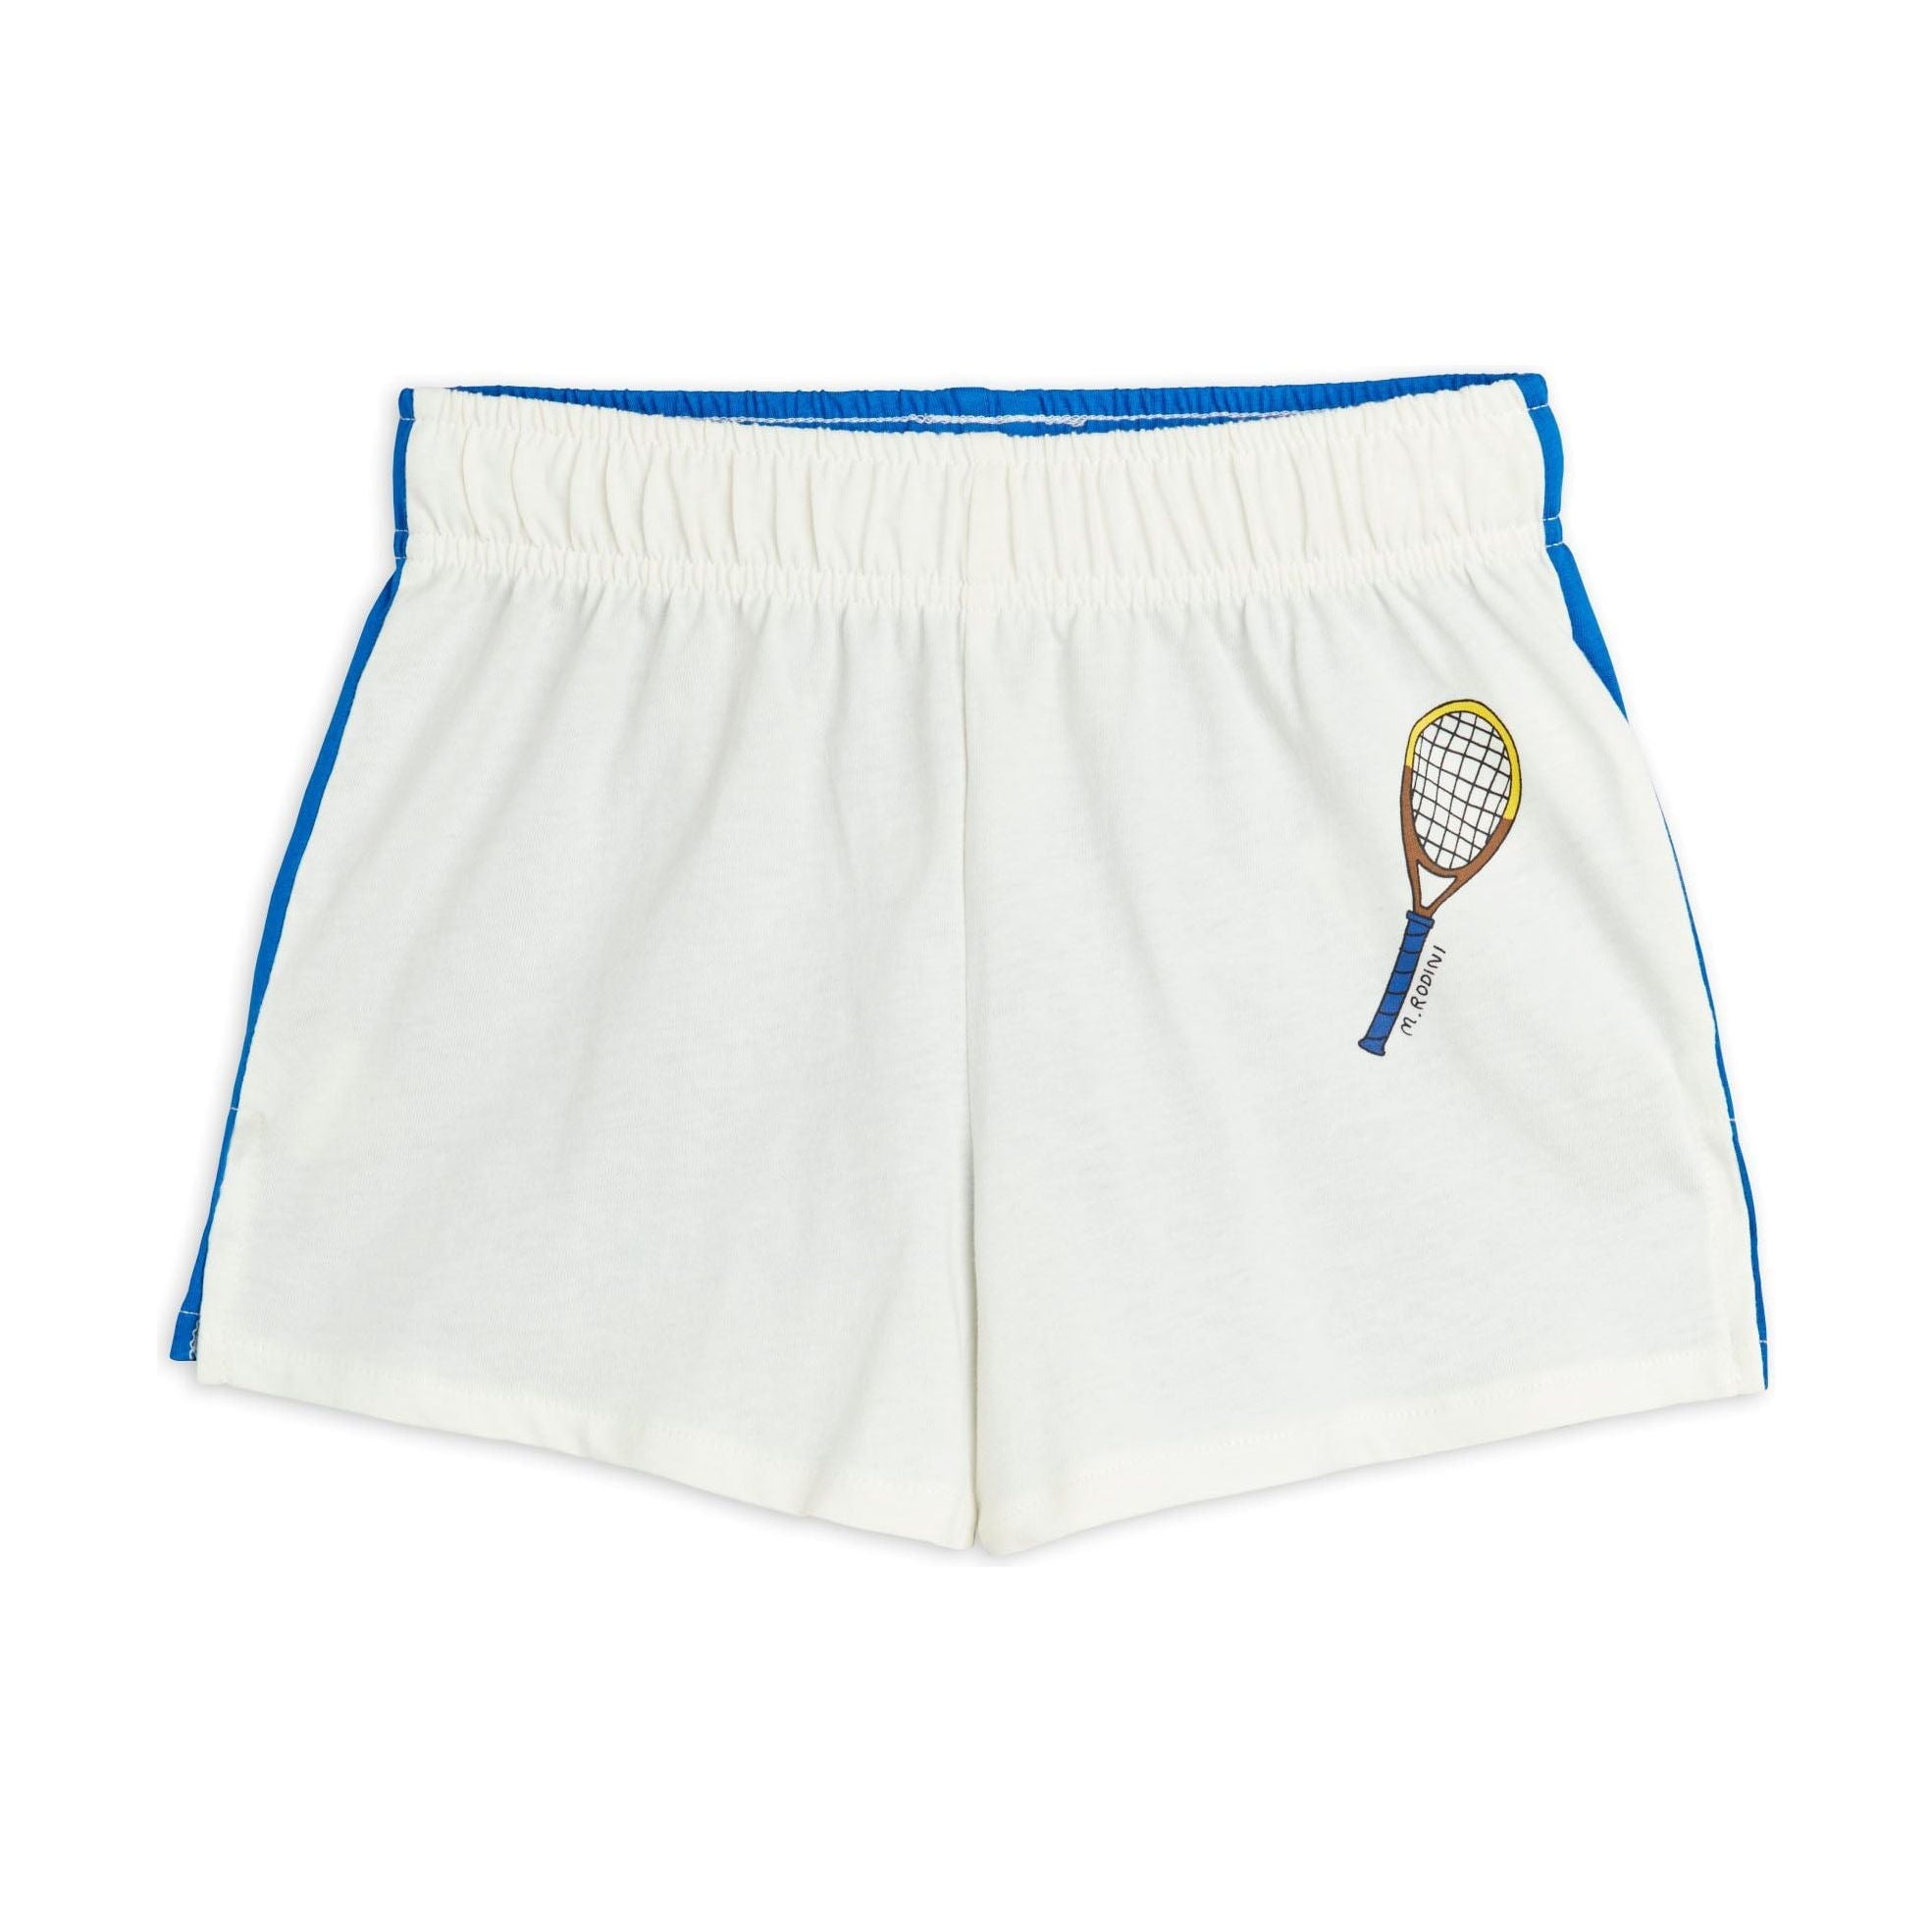 Tennis Sp Shorts - White